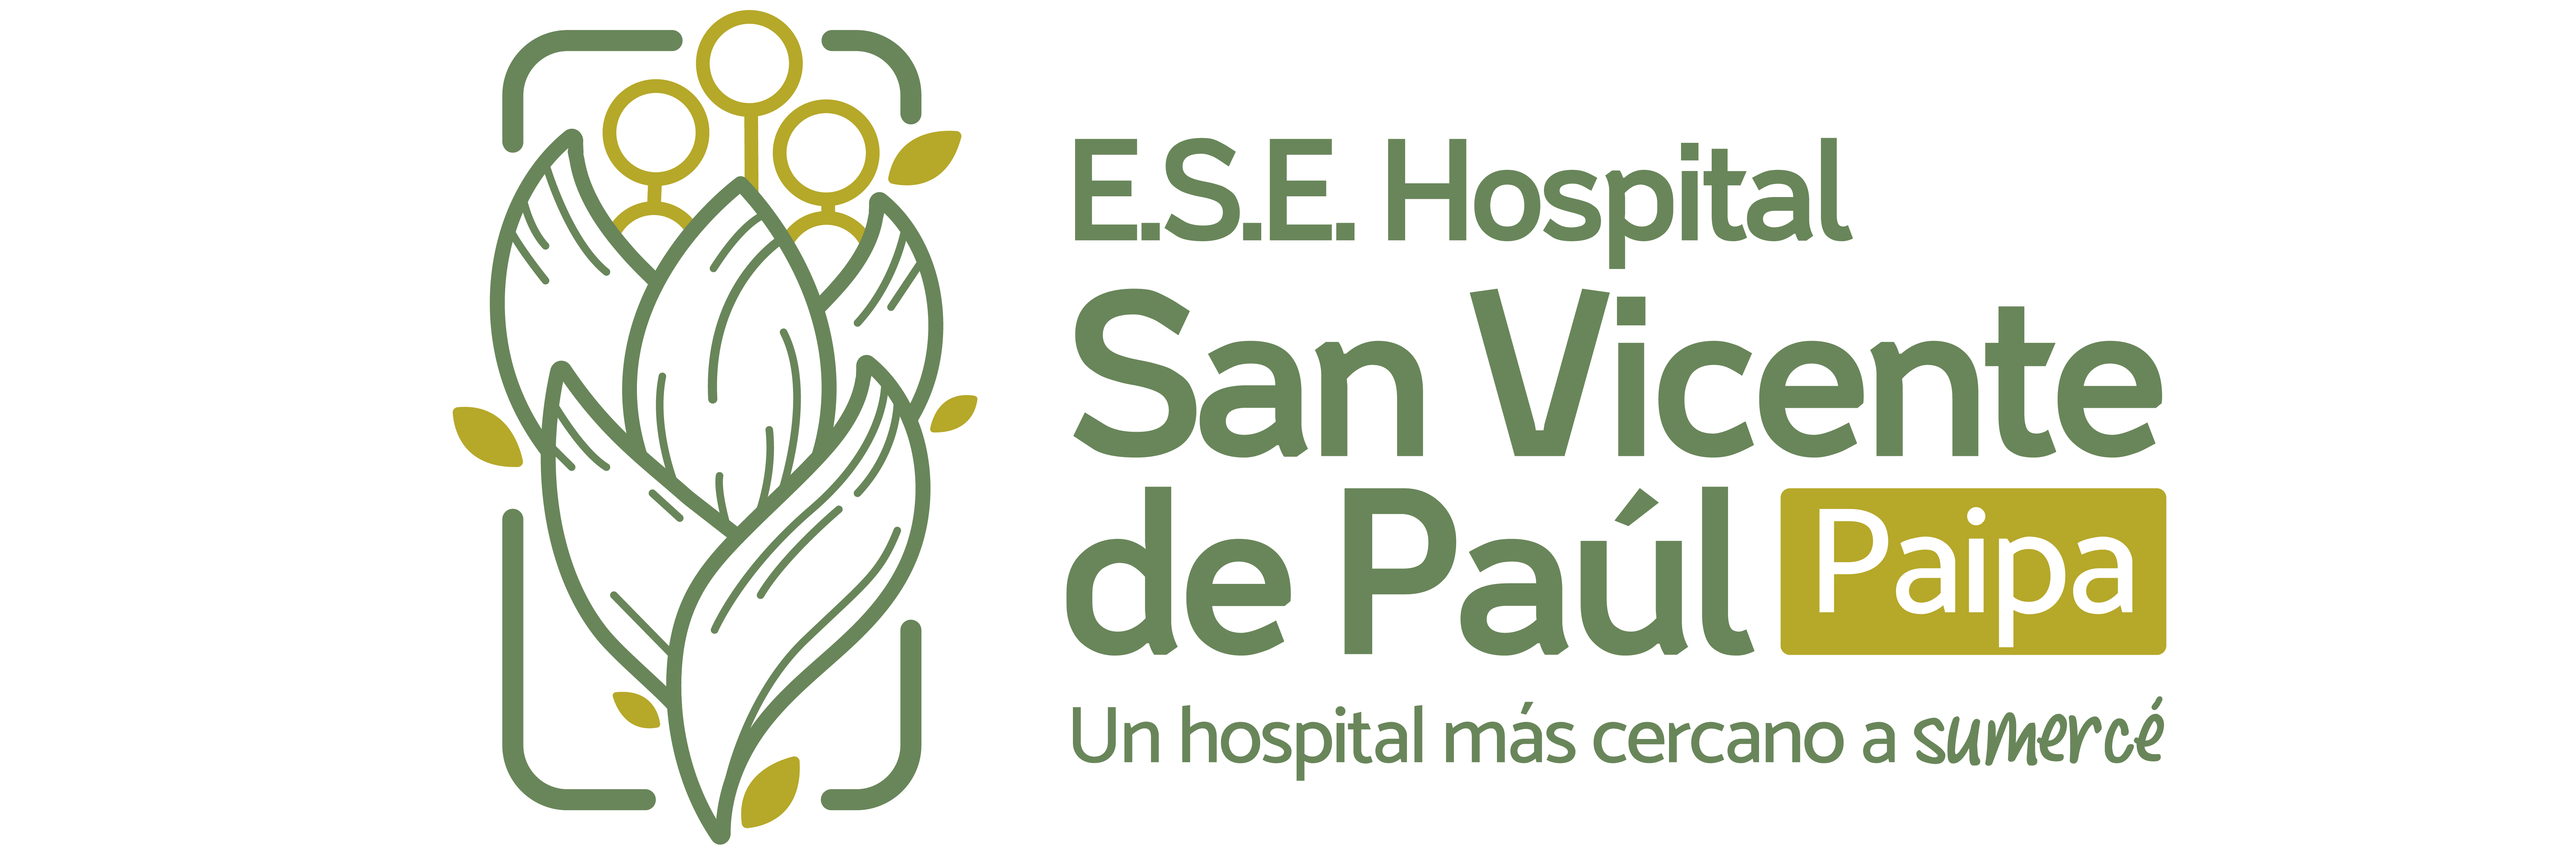 Hospital San Vicente de Paúl de Paipa